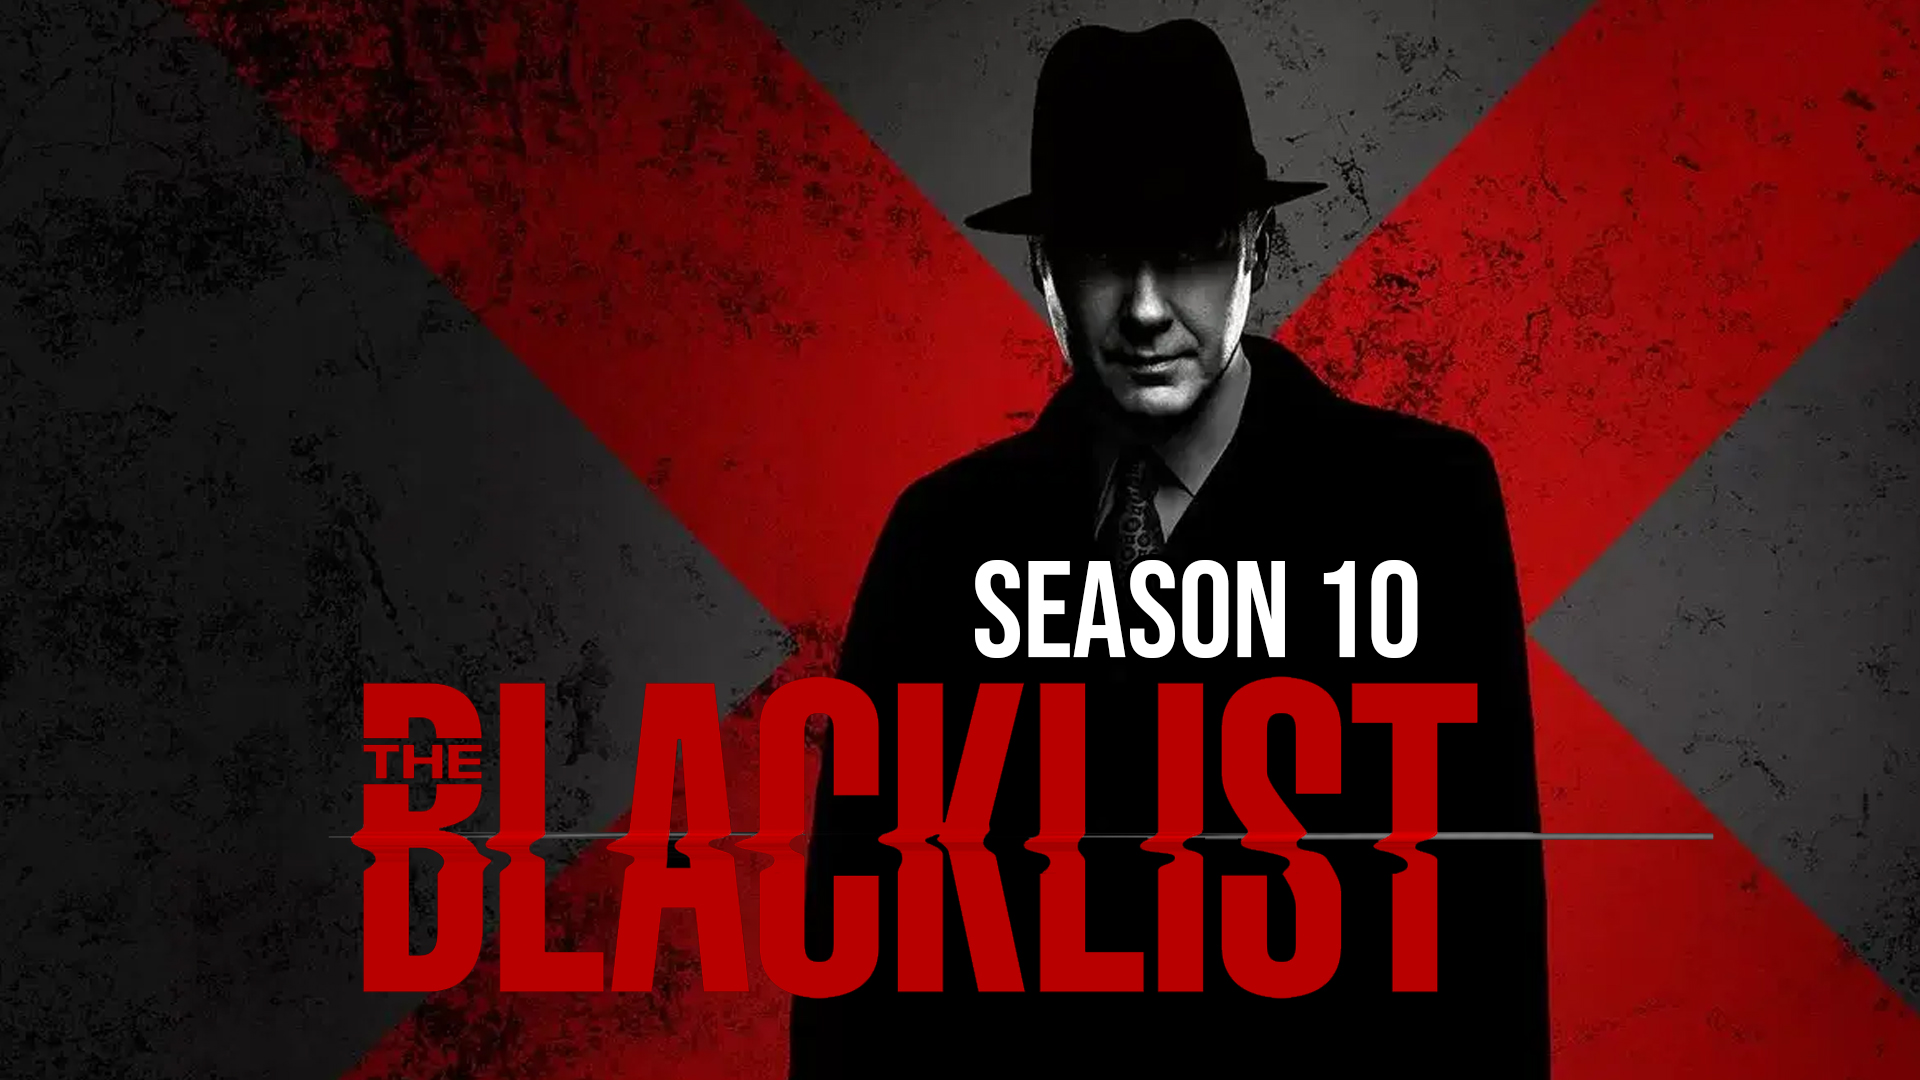 The Blacklist Season 10 Netflix US Release Date Revealed!